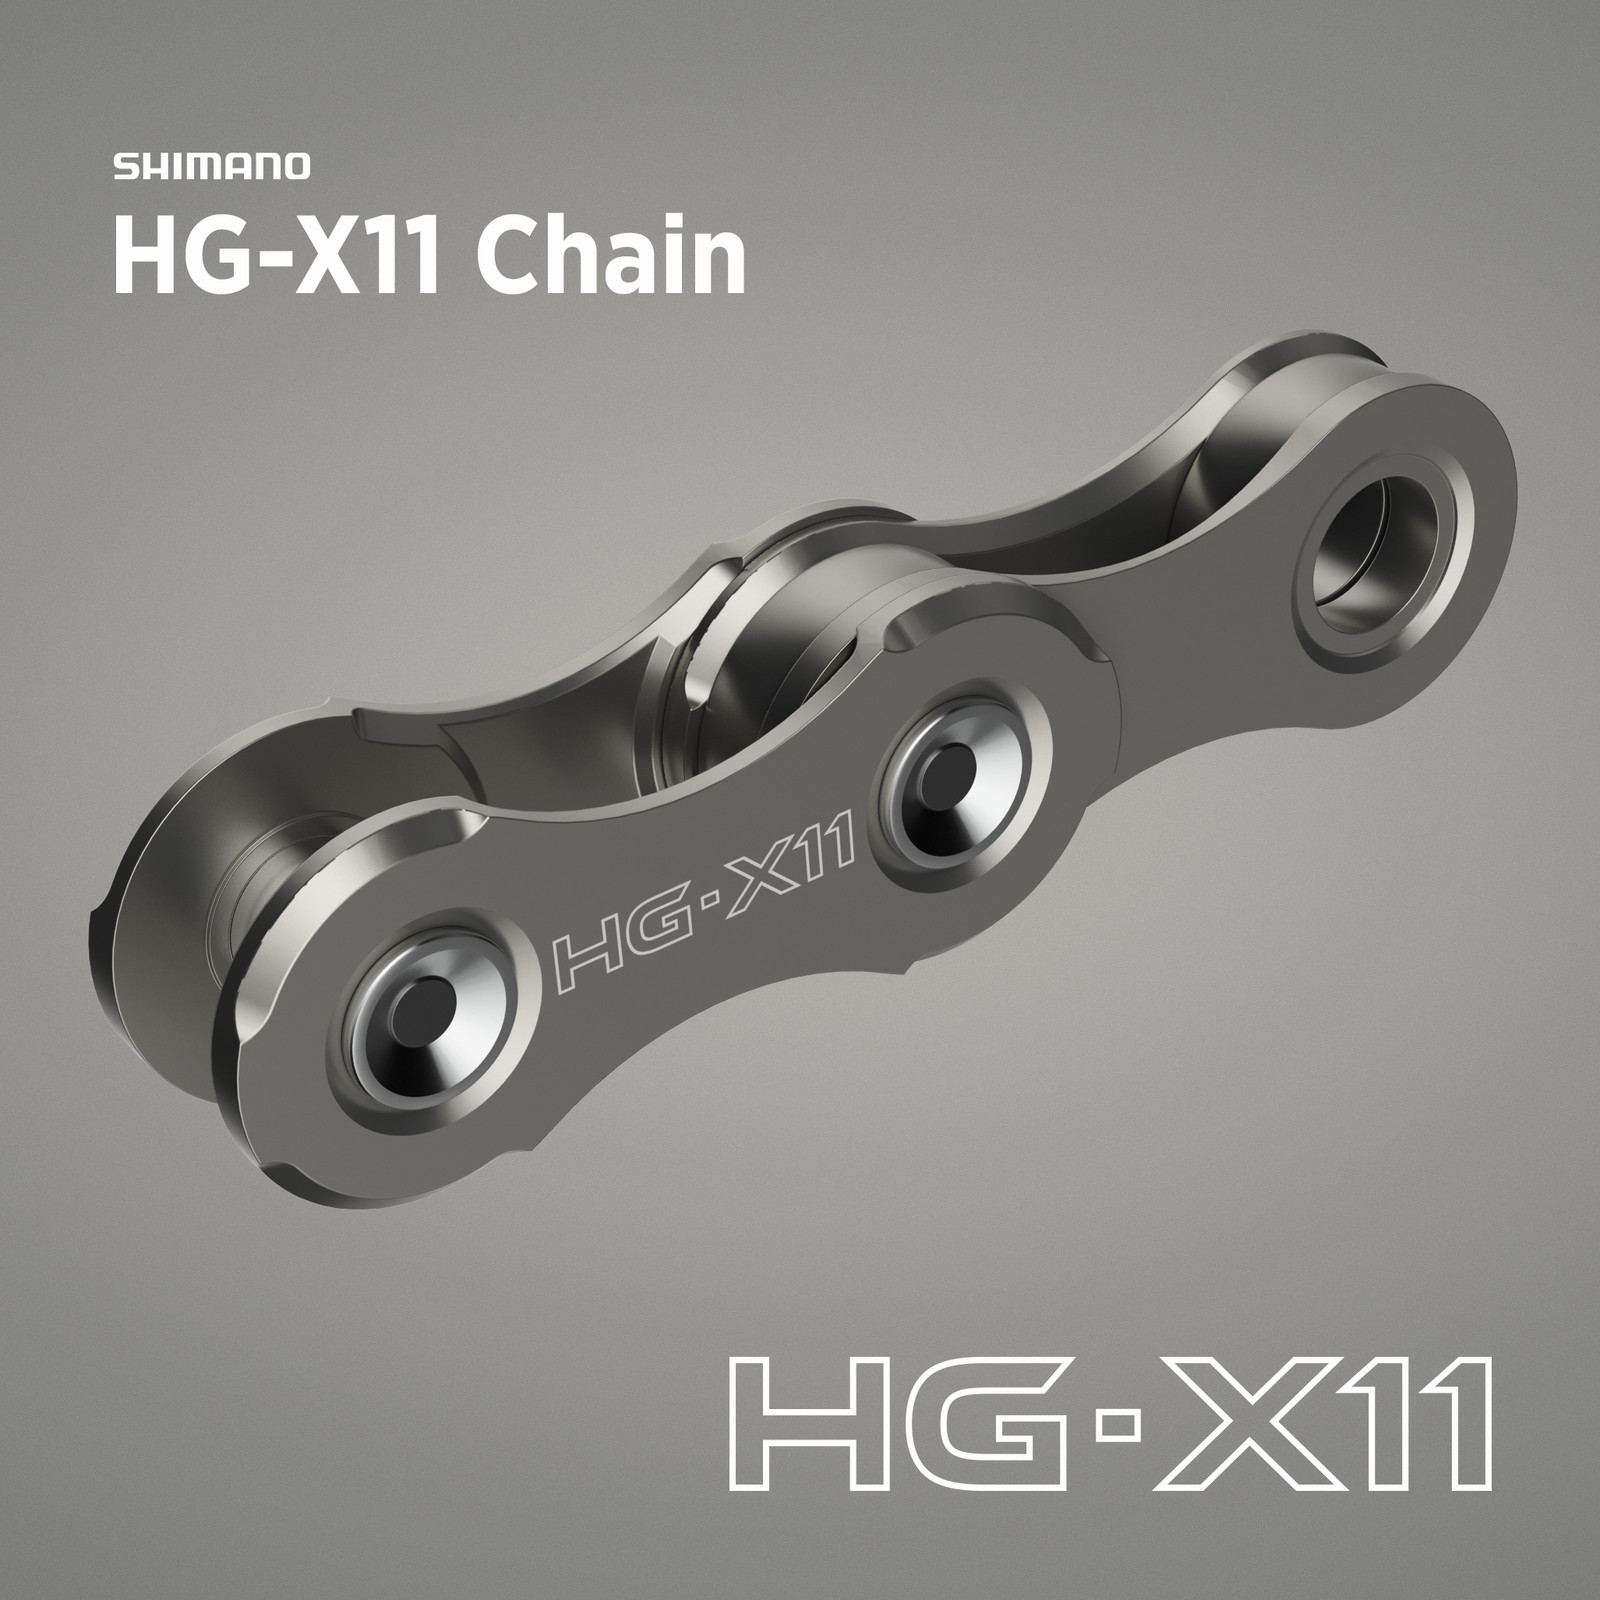 ArtStation - Chain: Shimano HG-X11 